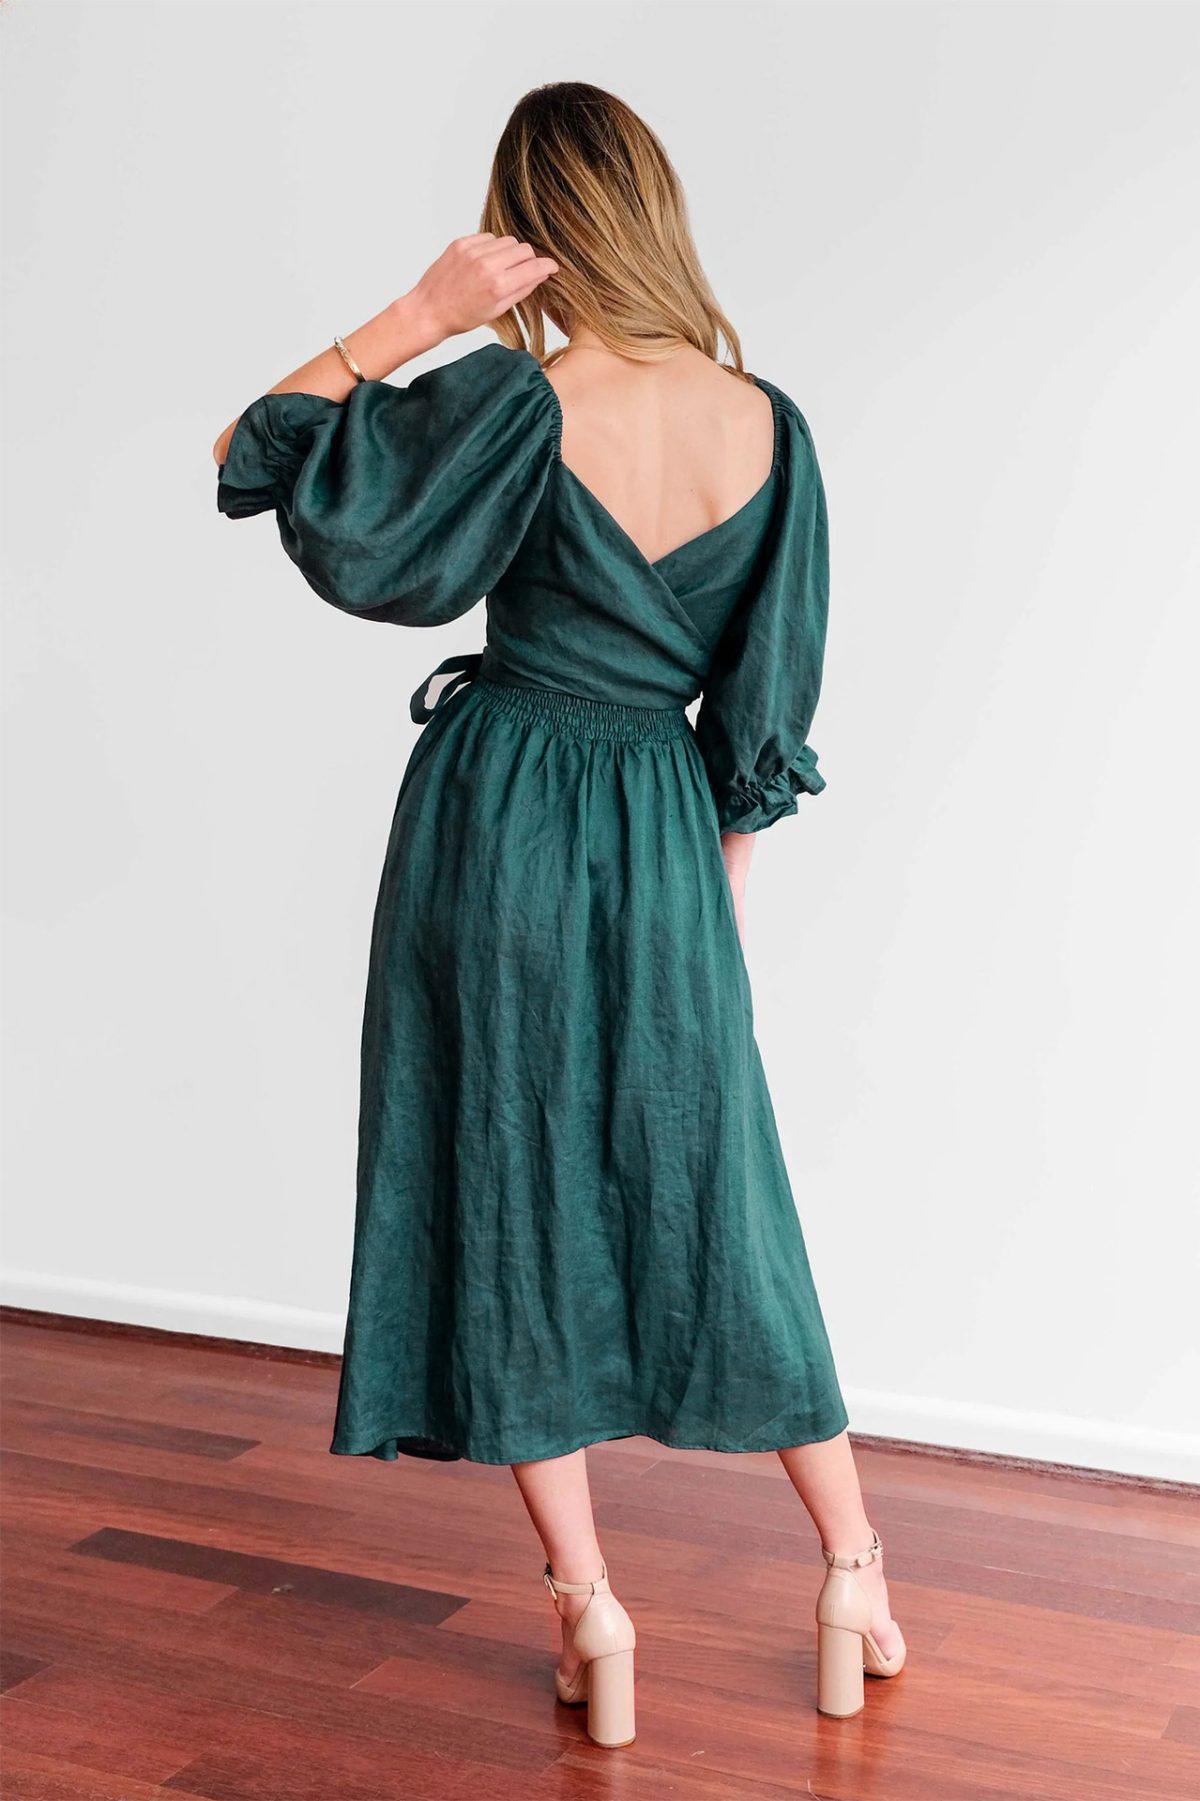 French High Sense Rope Belt Ruffled Lantern Sleeves Emerald Dress in Cocktail Dresses